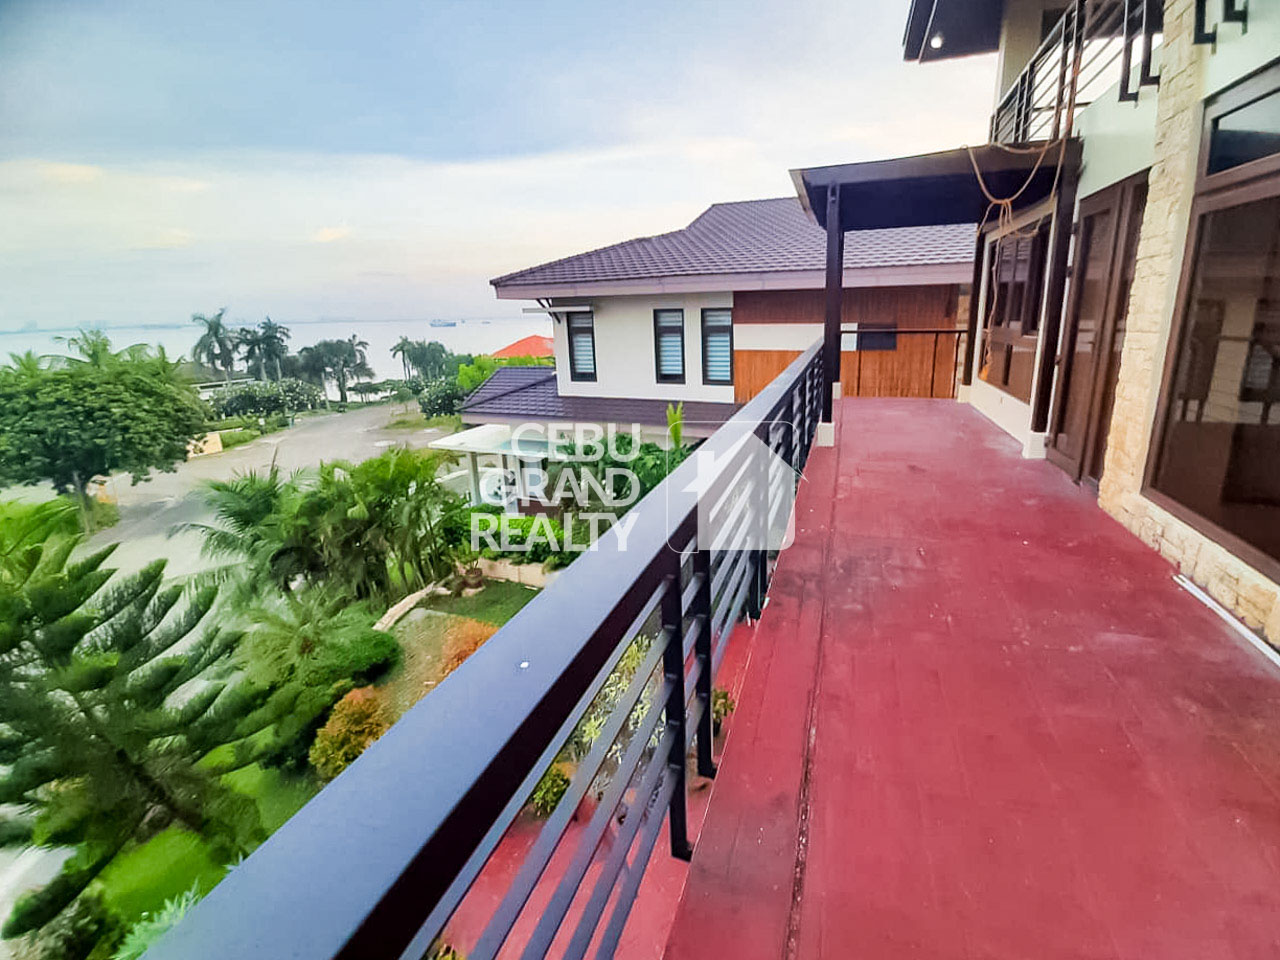 SRBAM3 6 Bedroom House for Sale in Amara Liloan - Cebu Grand Realty (17)